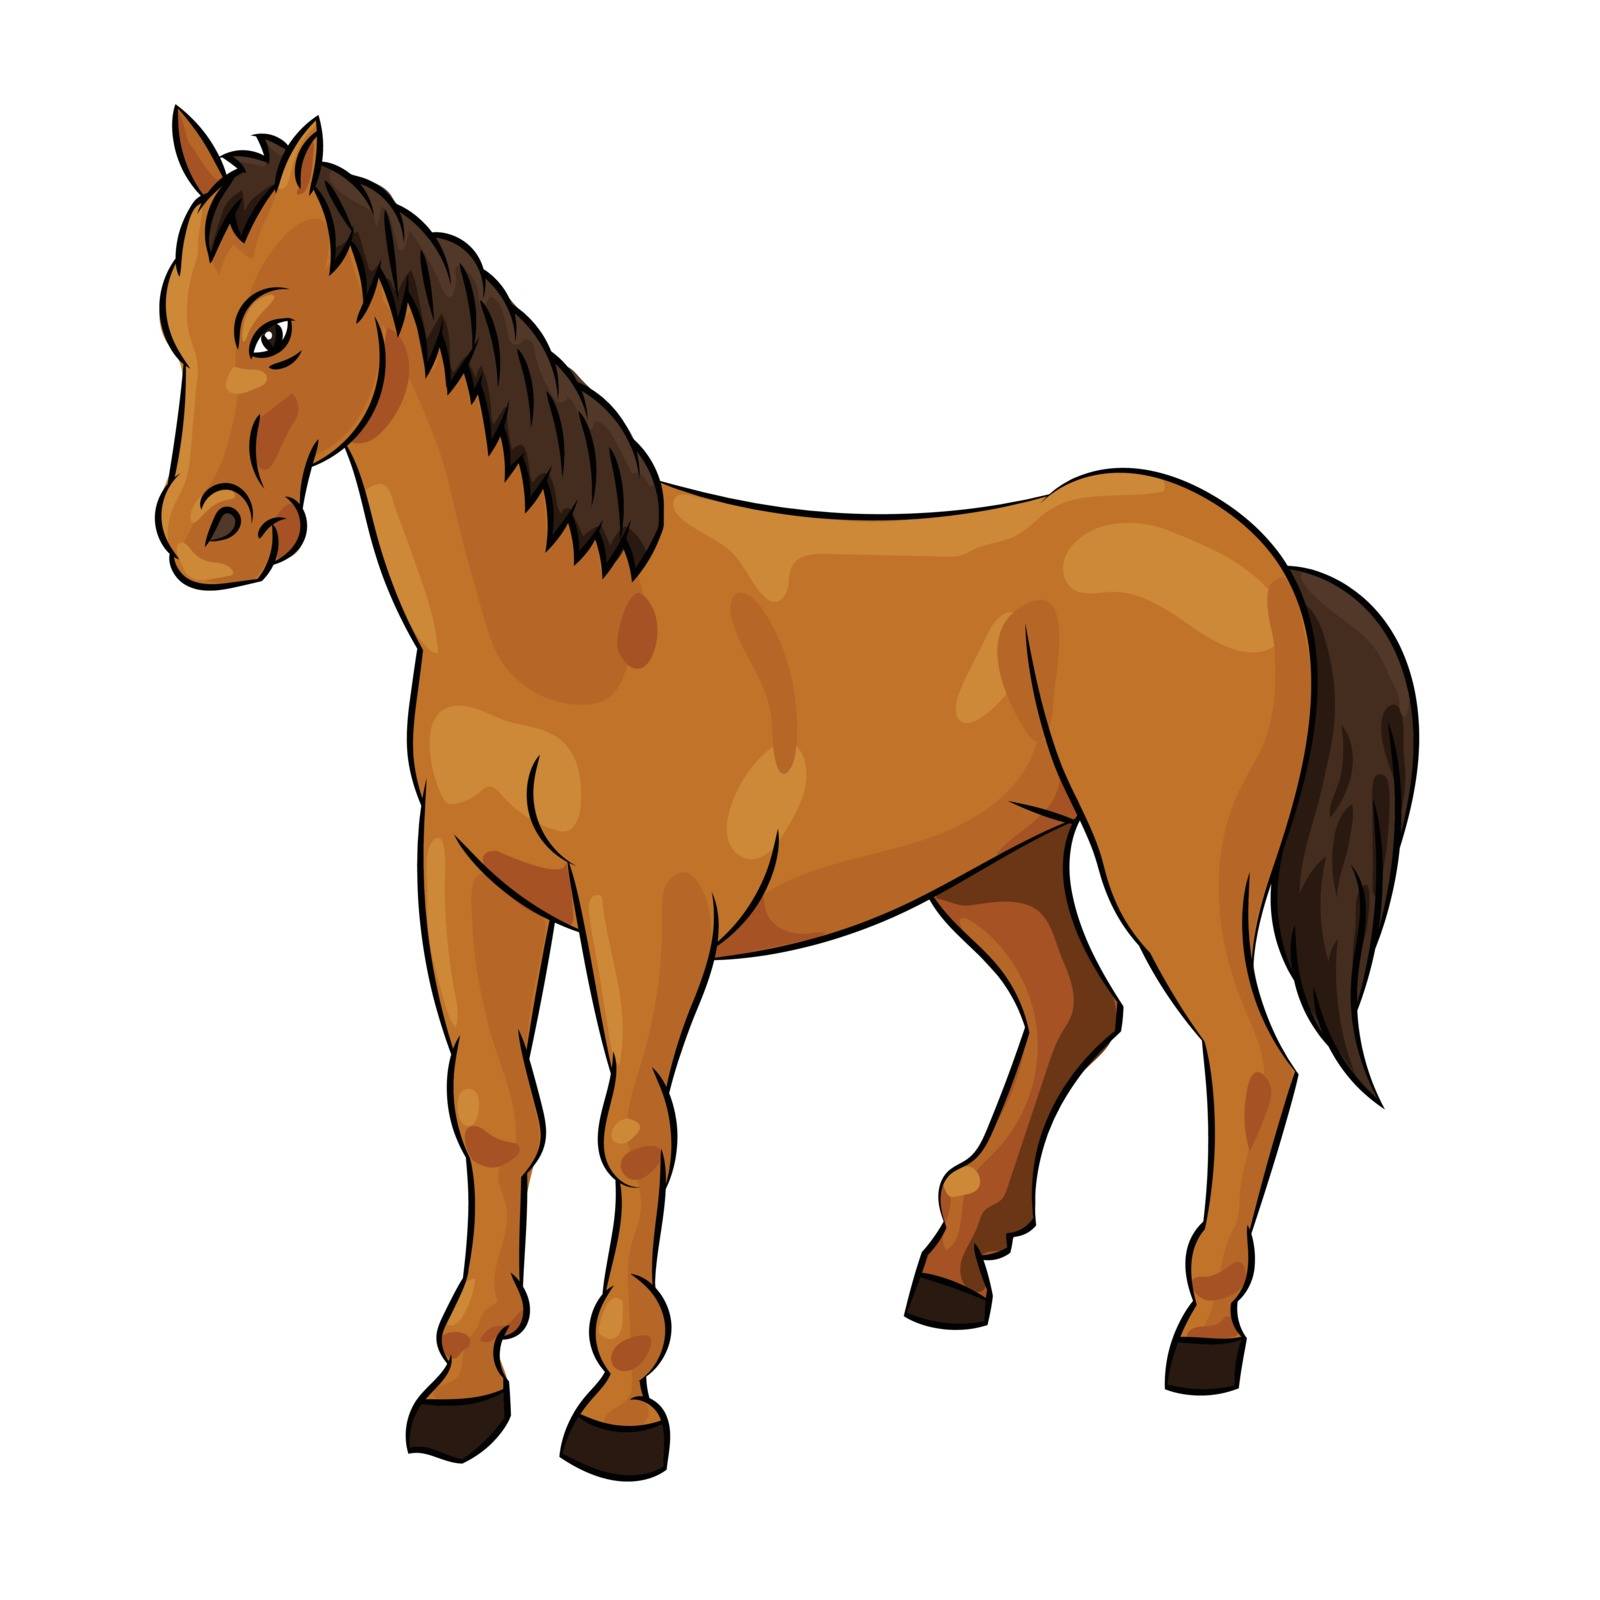 Illustration of Horse standing Isolated on white background. Children's illustration. Vector.

 